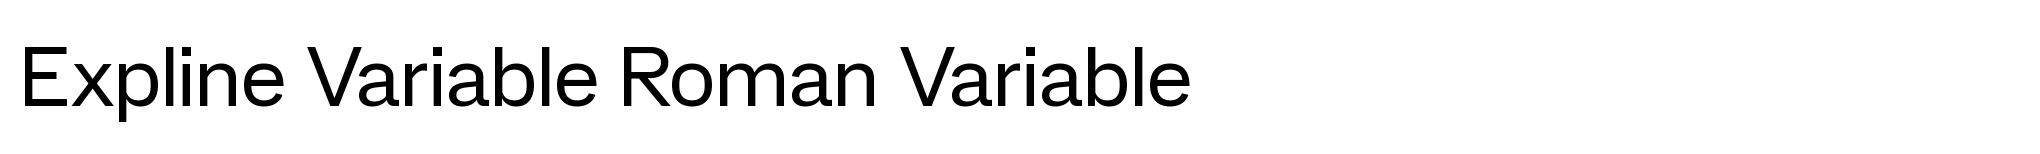 Expline Variable Roman Variable image